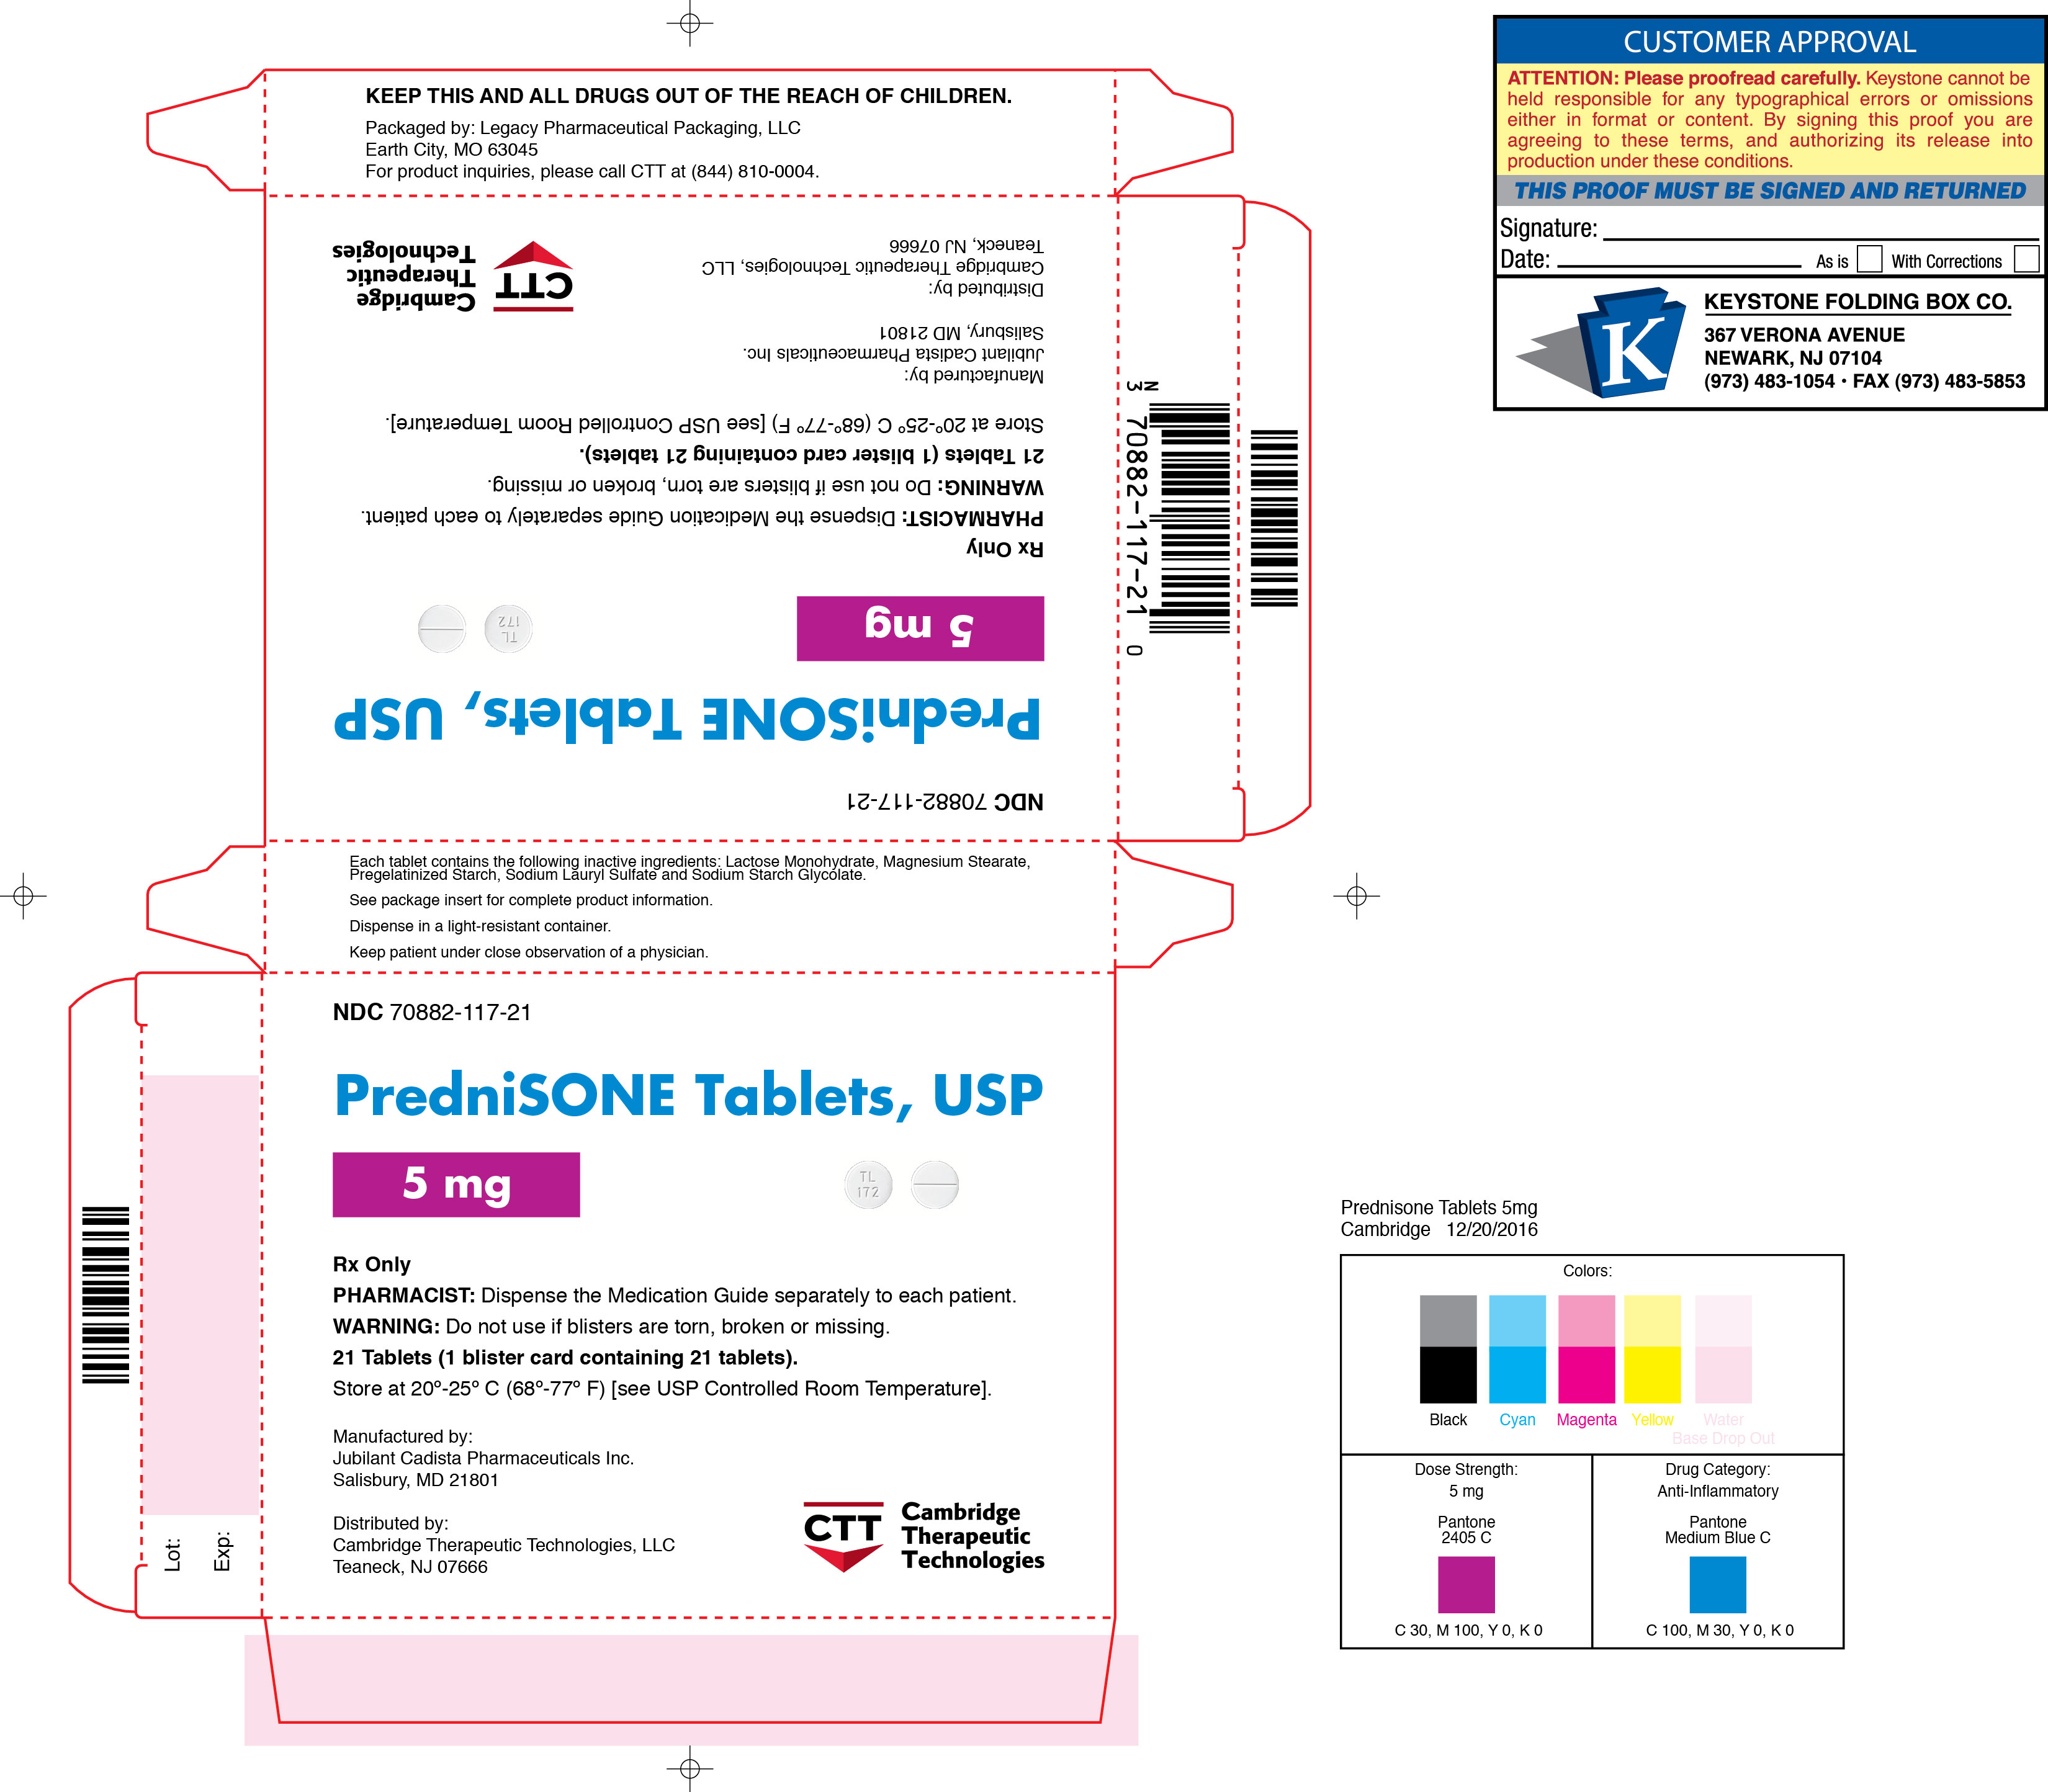 Prednisone Tablets, USP 5 mg 21 count